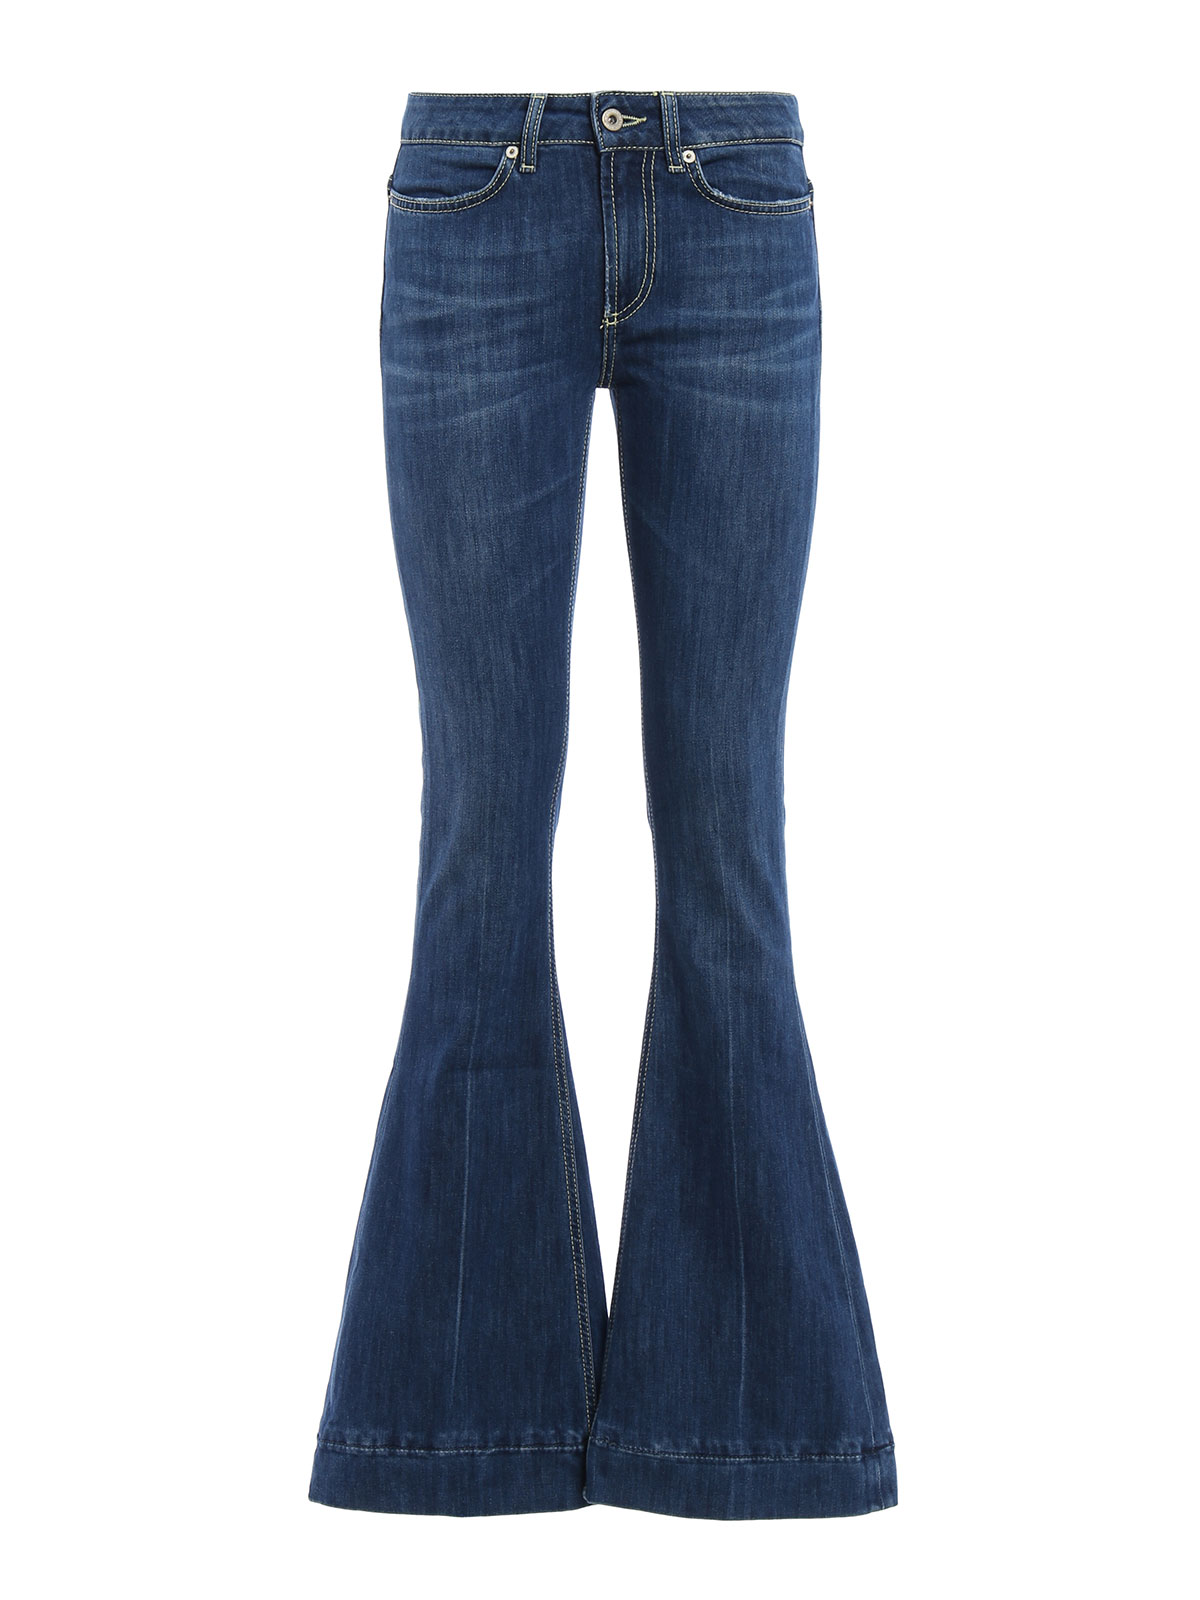 bootcut jeans sale